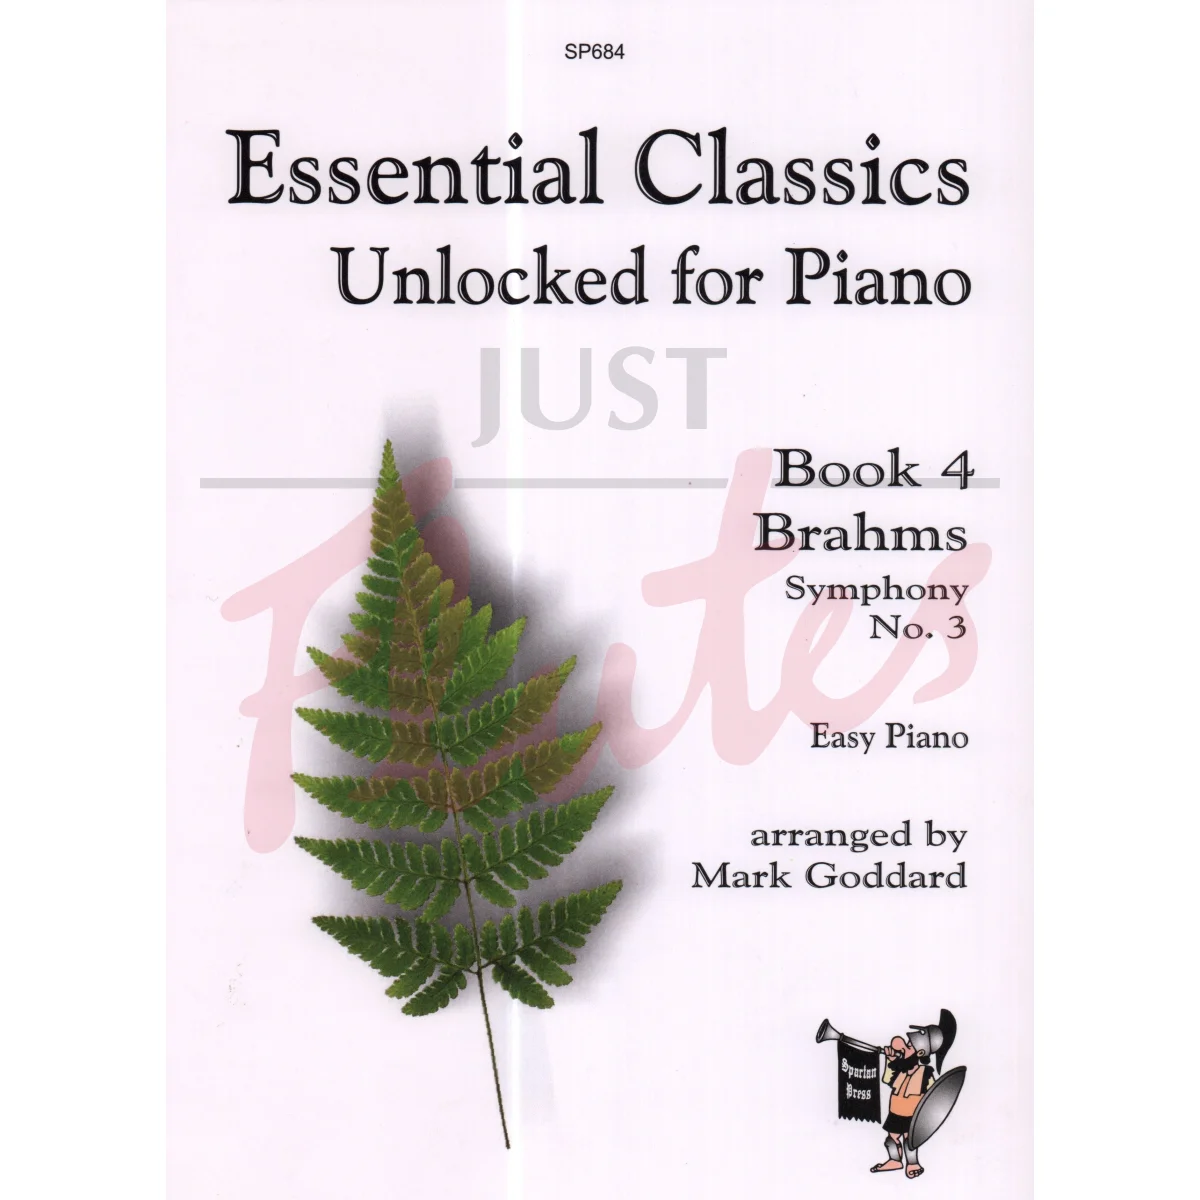 Essential Classics Unlocked for Piano: Book 4, Brahms Symphony No 3